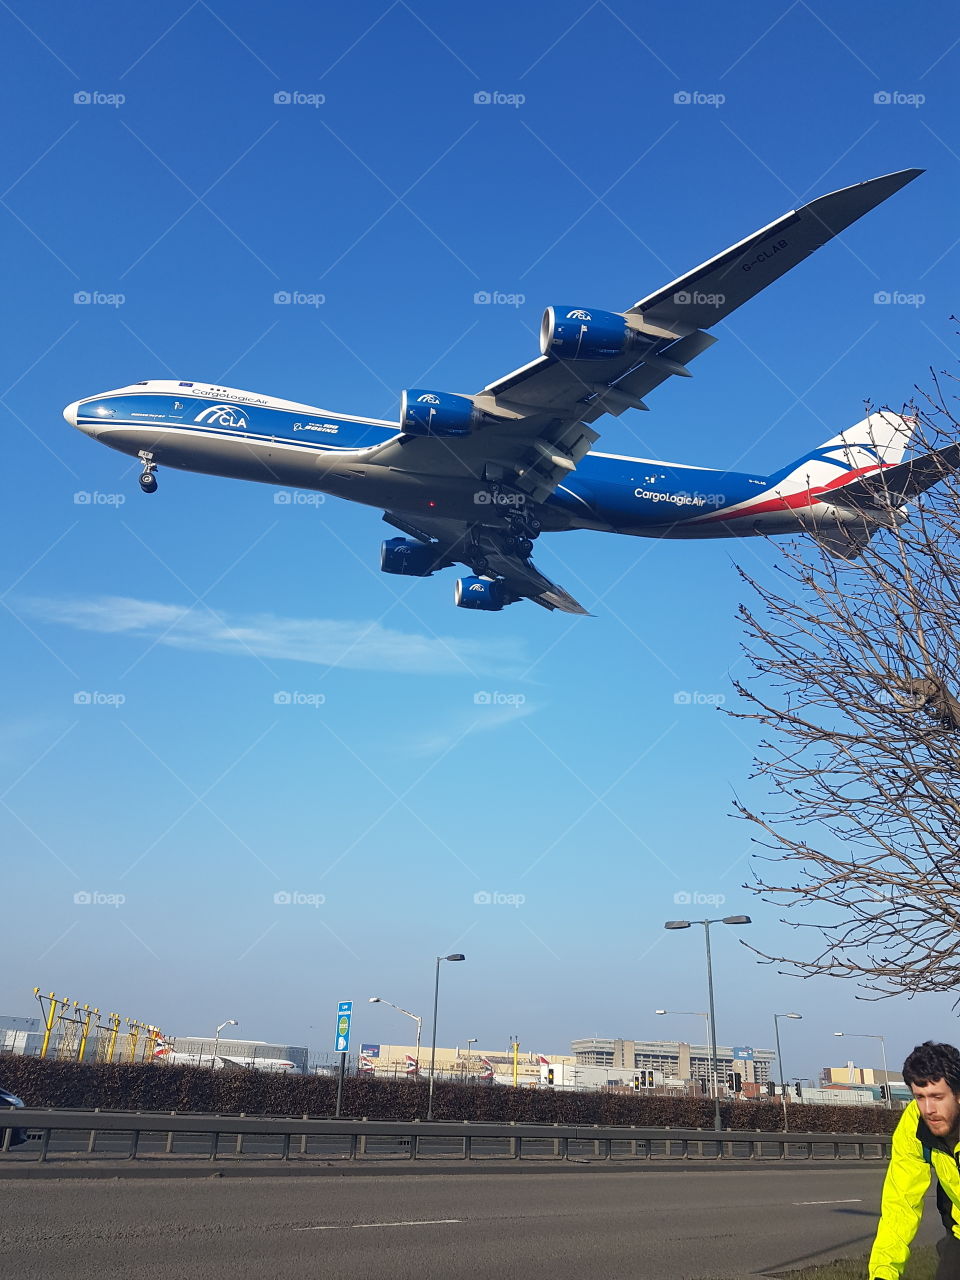 Landing at Heathrow